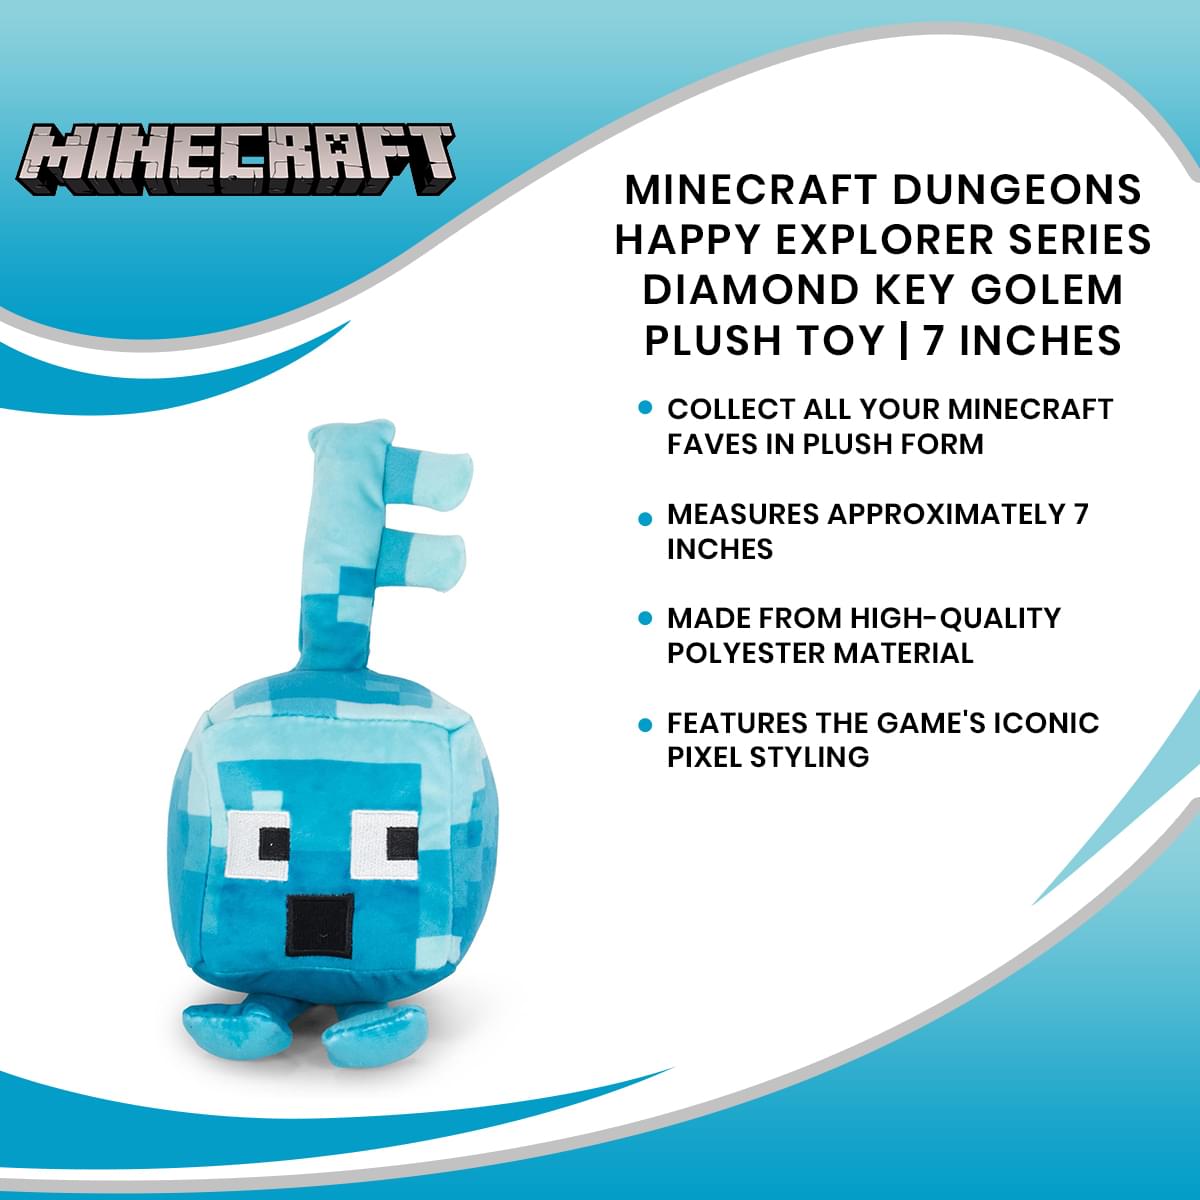 Minecraft Dungeons Happy Explorer Series Diamond Key Golem Plush Toy | 7 Inches